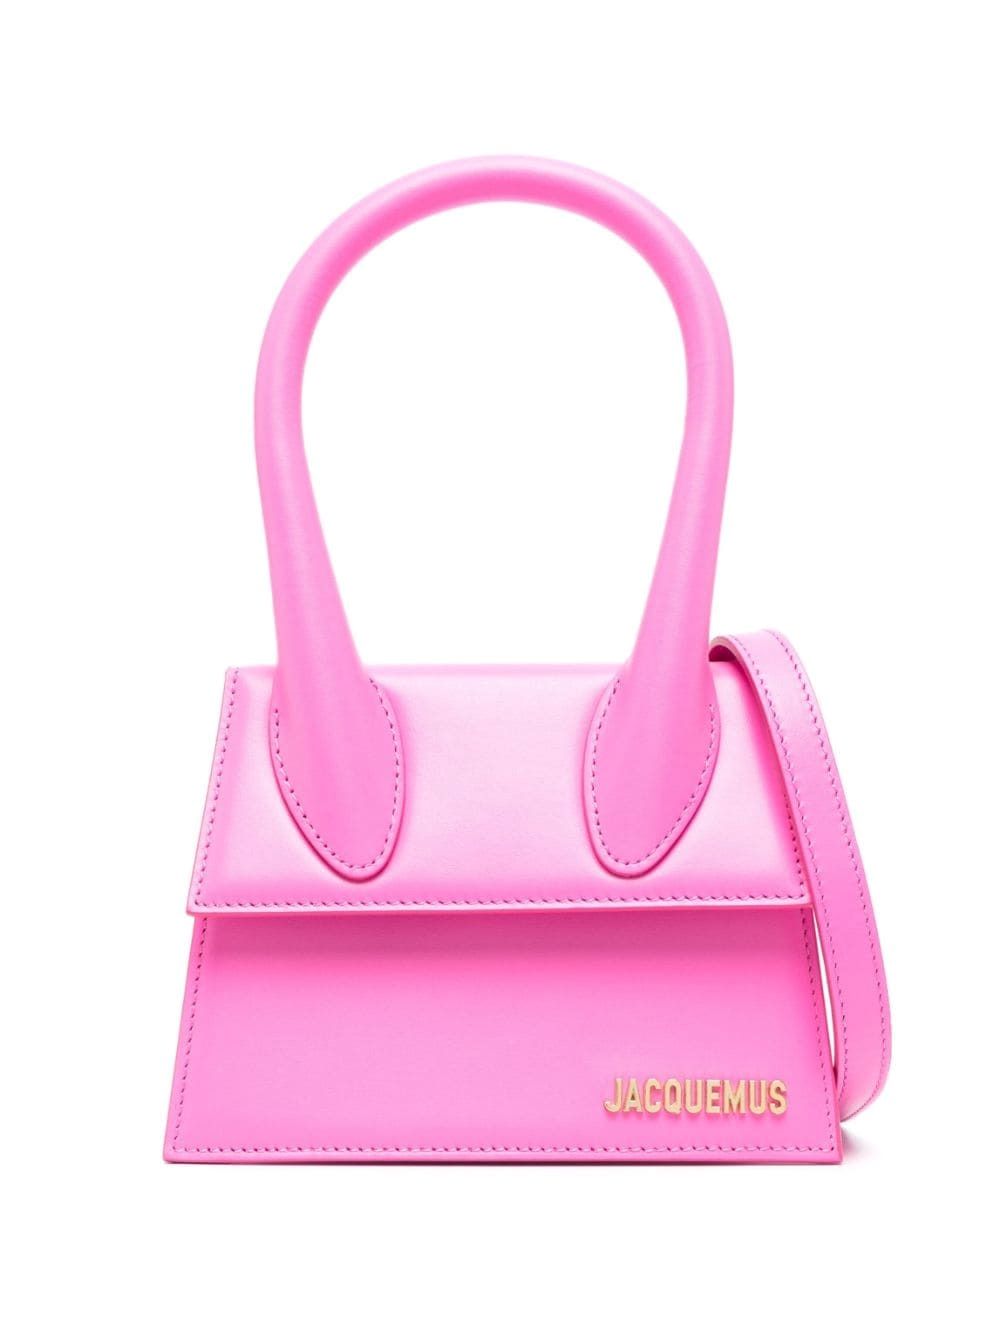 Jacquemus Le Chiquito Moyen Handbag in Neon Pink